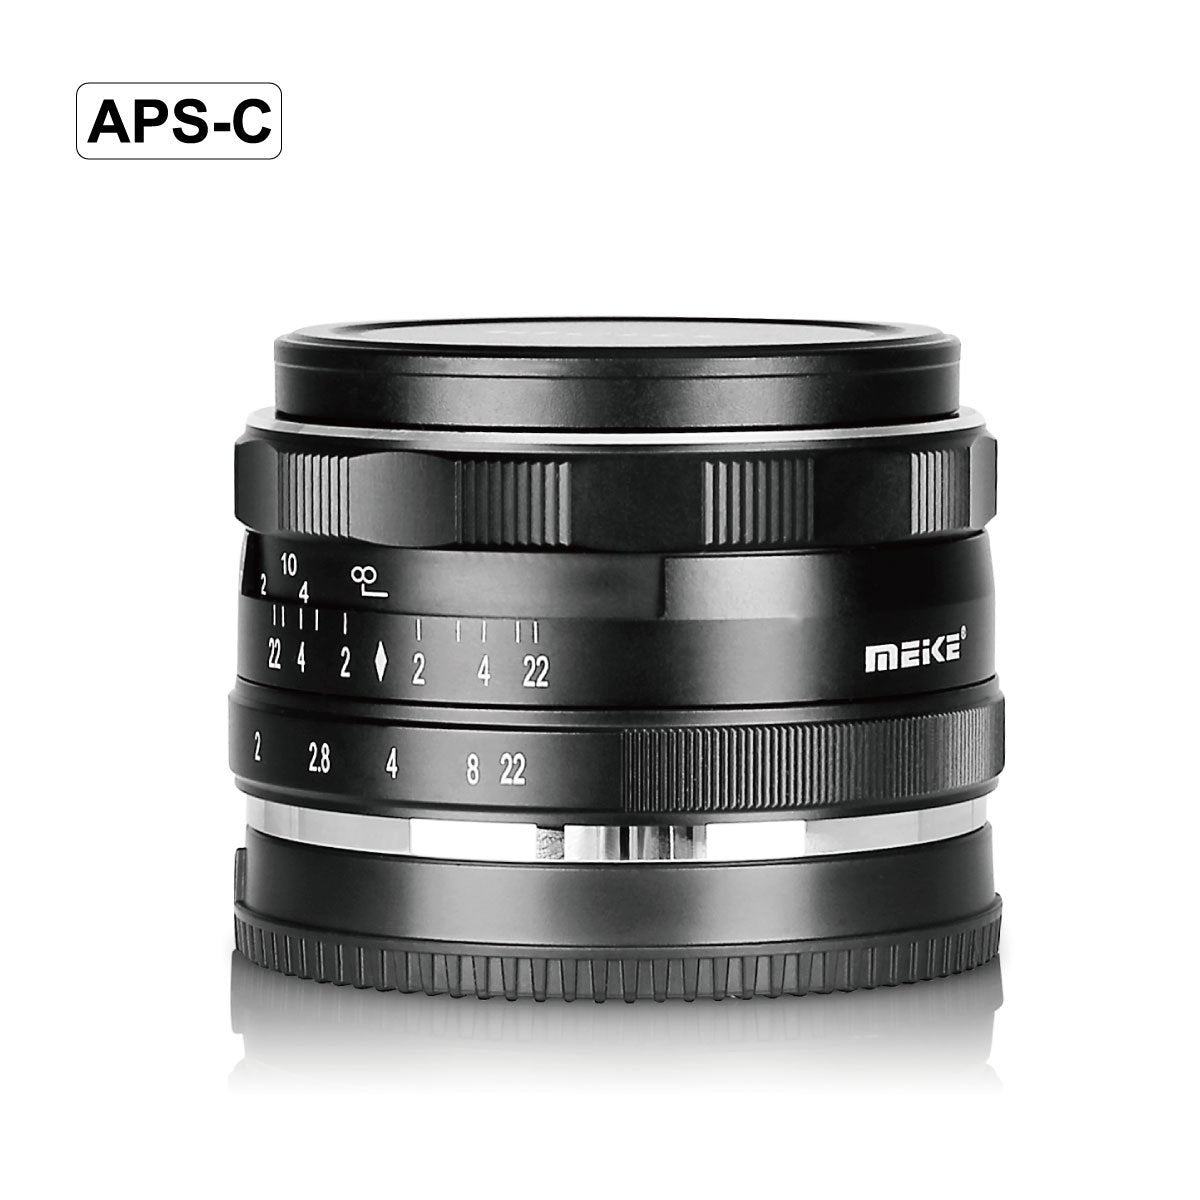 Meike MK-35mm 35mm f/1.7 Large Aperture Manual Focus APS-C Lens For Fujifilm X Mount Mirrorless Camera X-Pro2 X-T1 X-T2 X-T10 X-T20 X-A2 X-E2 X-E2s X-E1 X30 X70 X-M1 X-A1 XPro1, etc